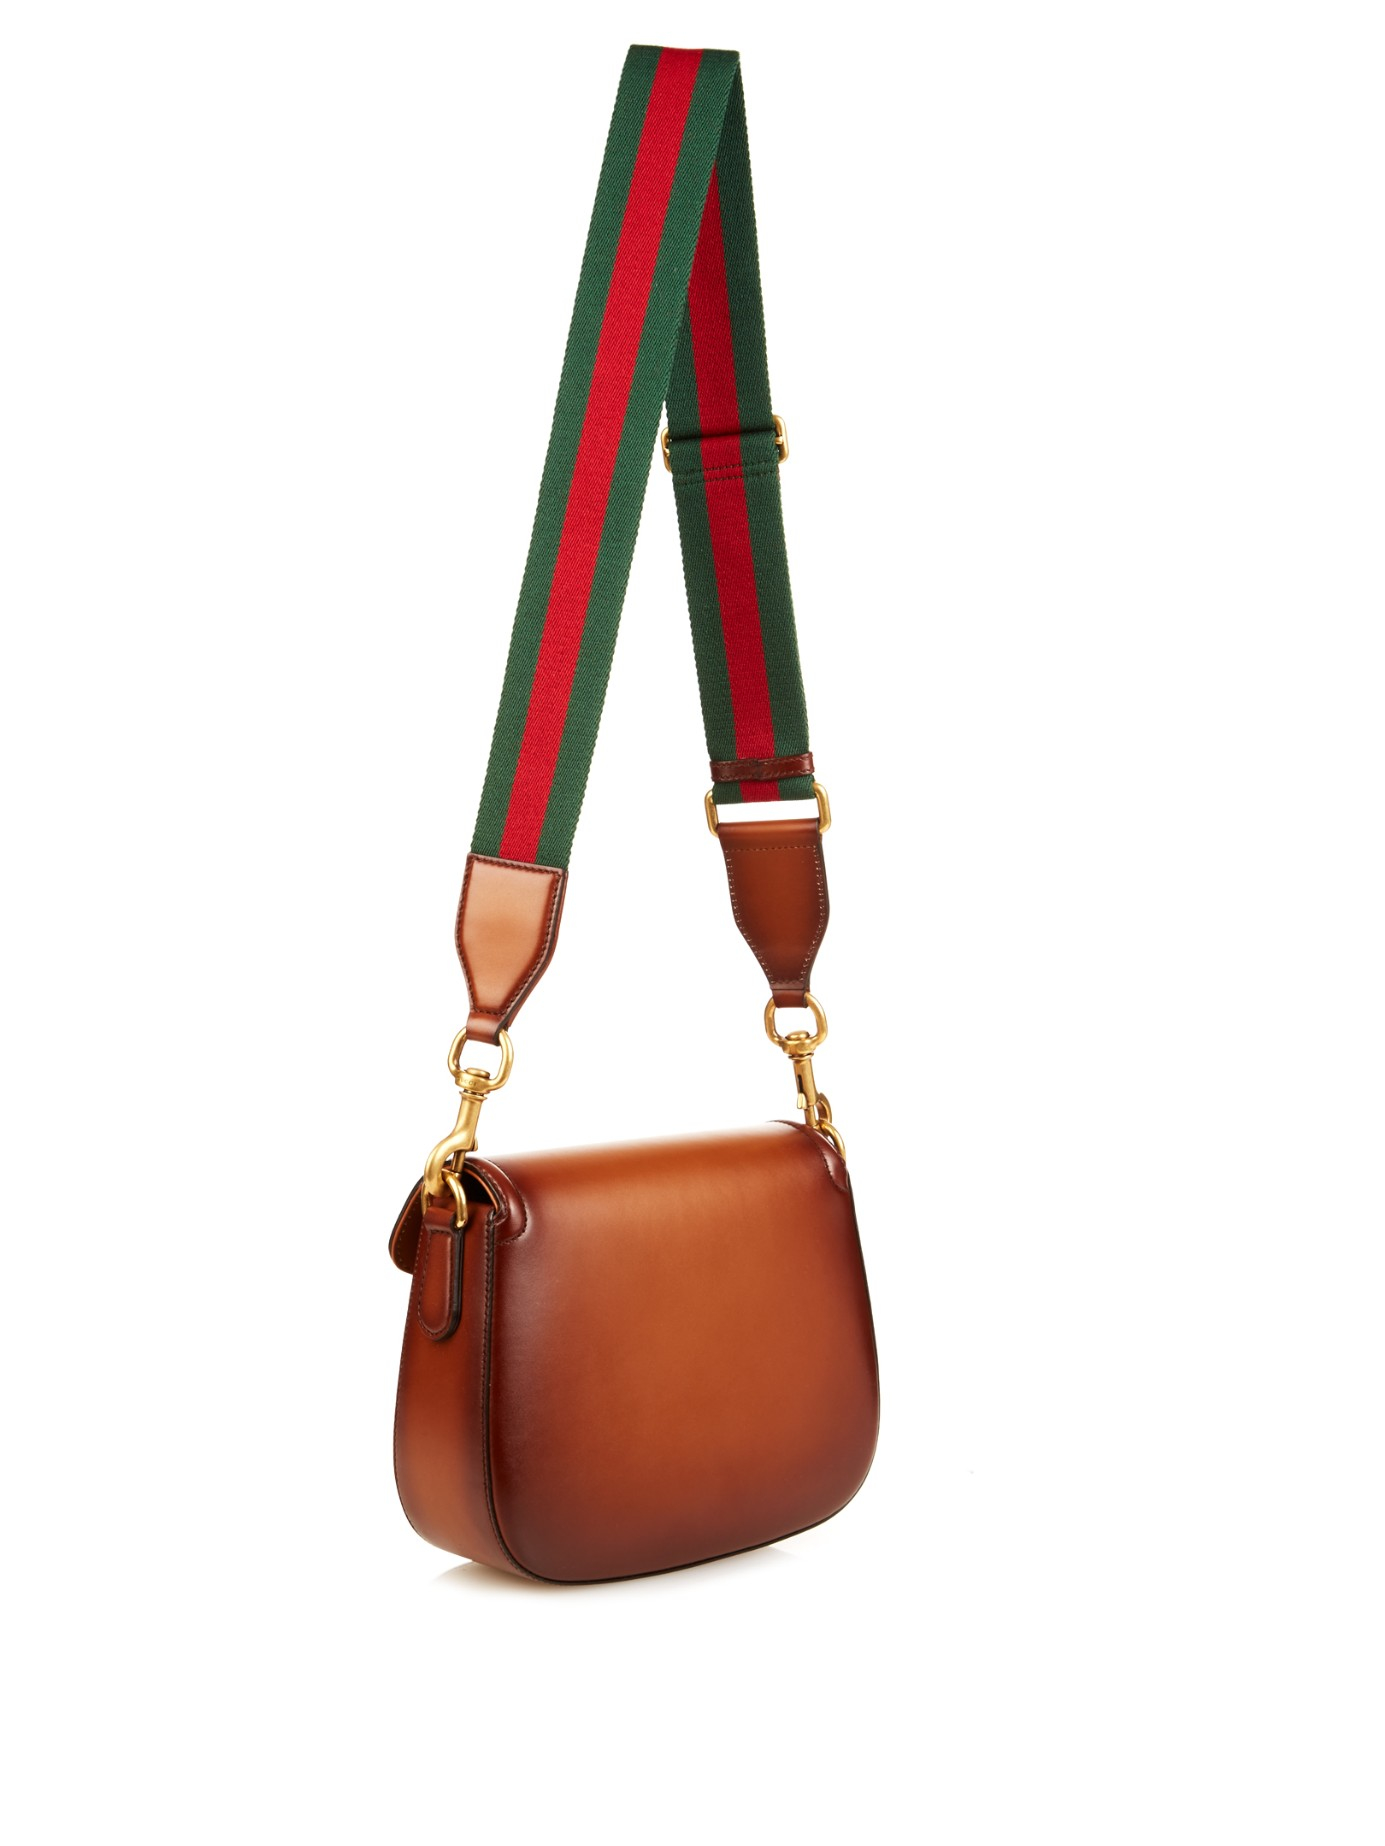 Lyst - Gucci Lady Web Medium Leather Shoulder Bag in Brown